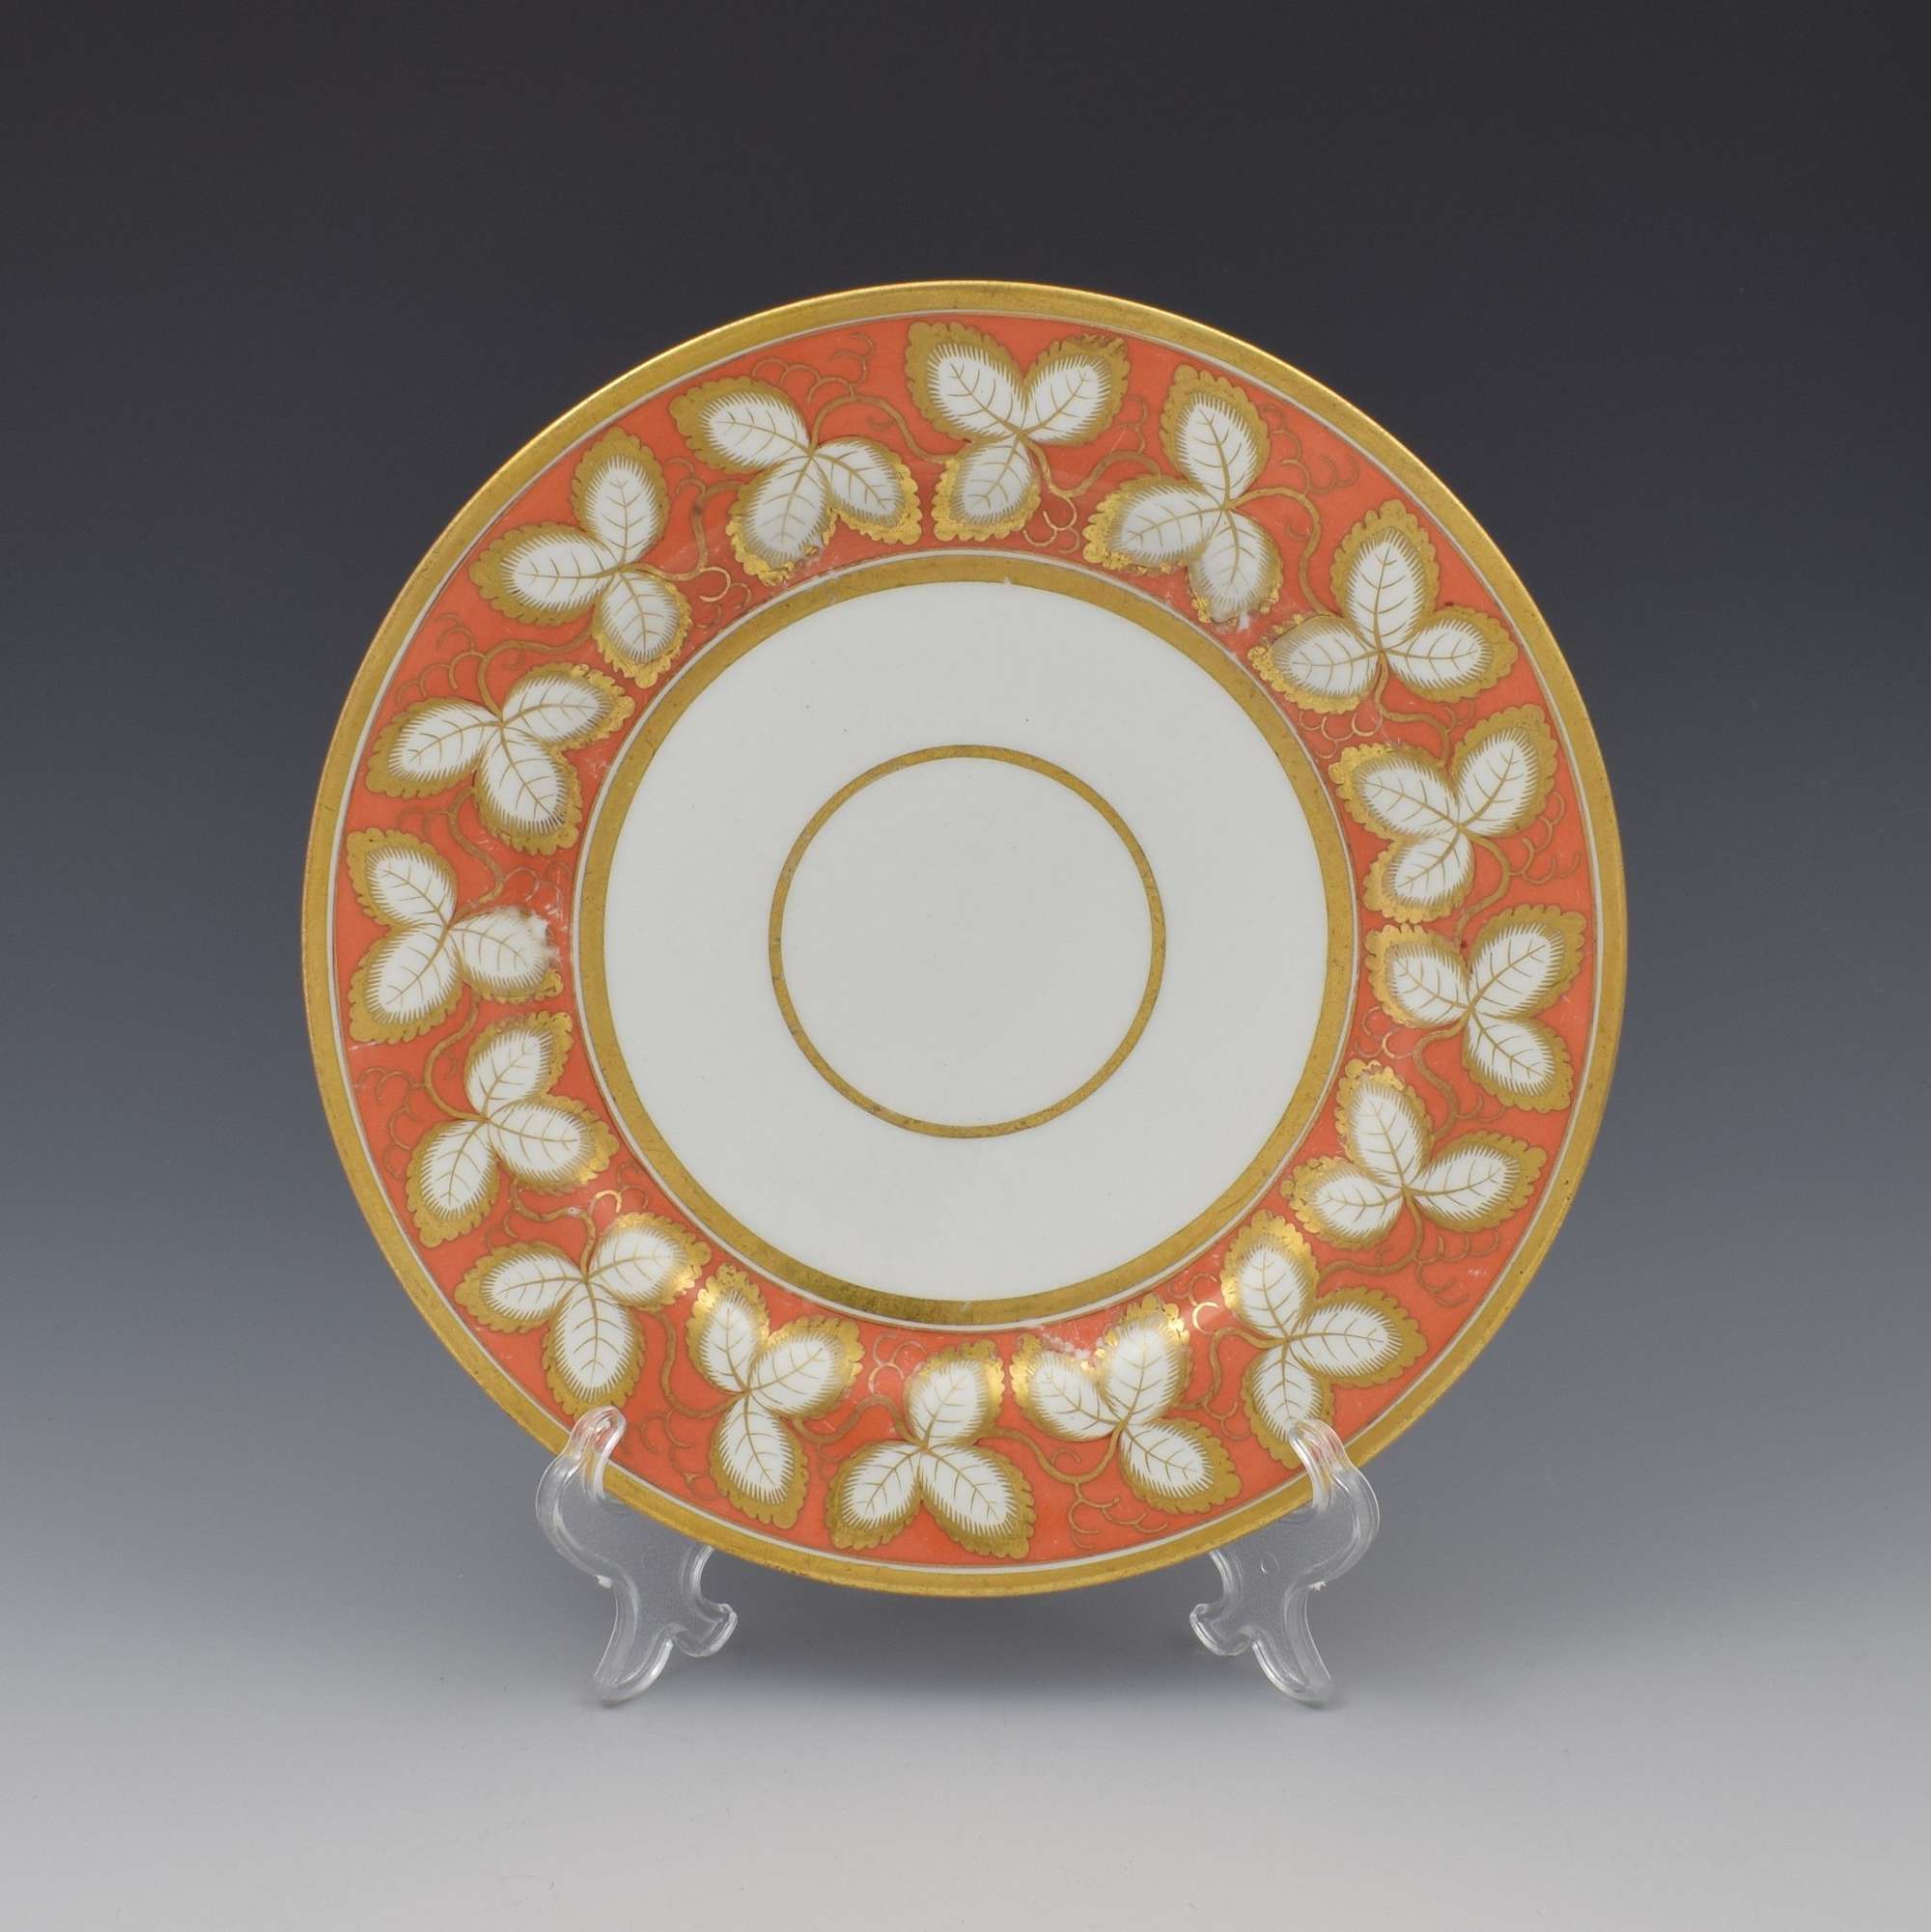 Barr, Flight & Barr Worcester Porcelain Dessert Plate c.1810